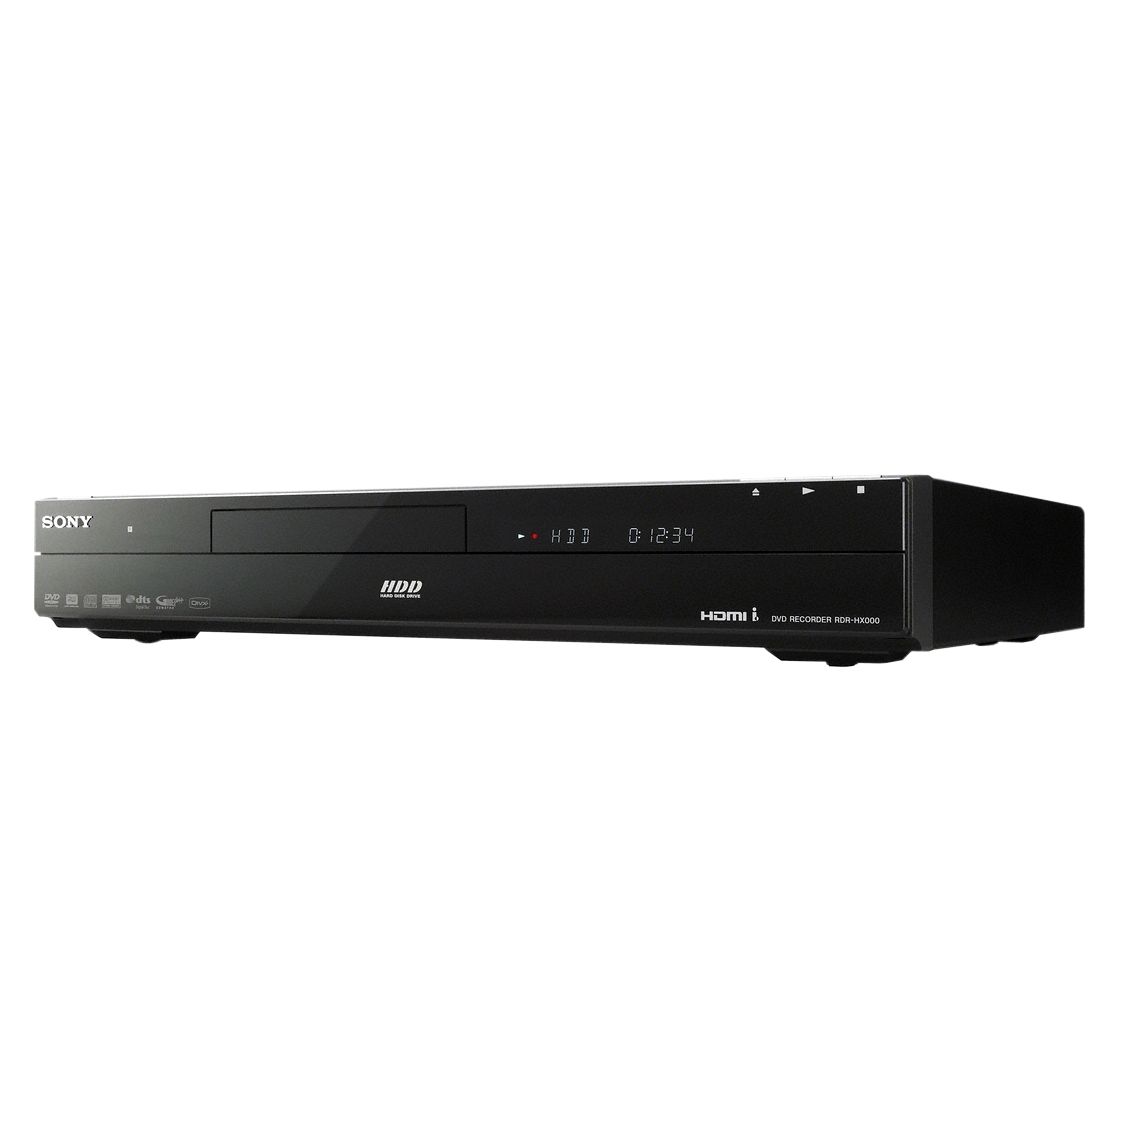 Sony RDR-DC100B 160GB DVD/HDD Digital Recorder at JohnLewis